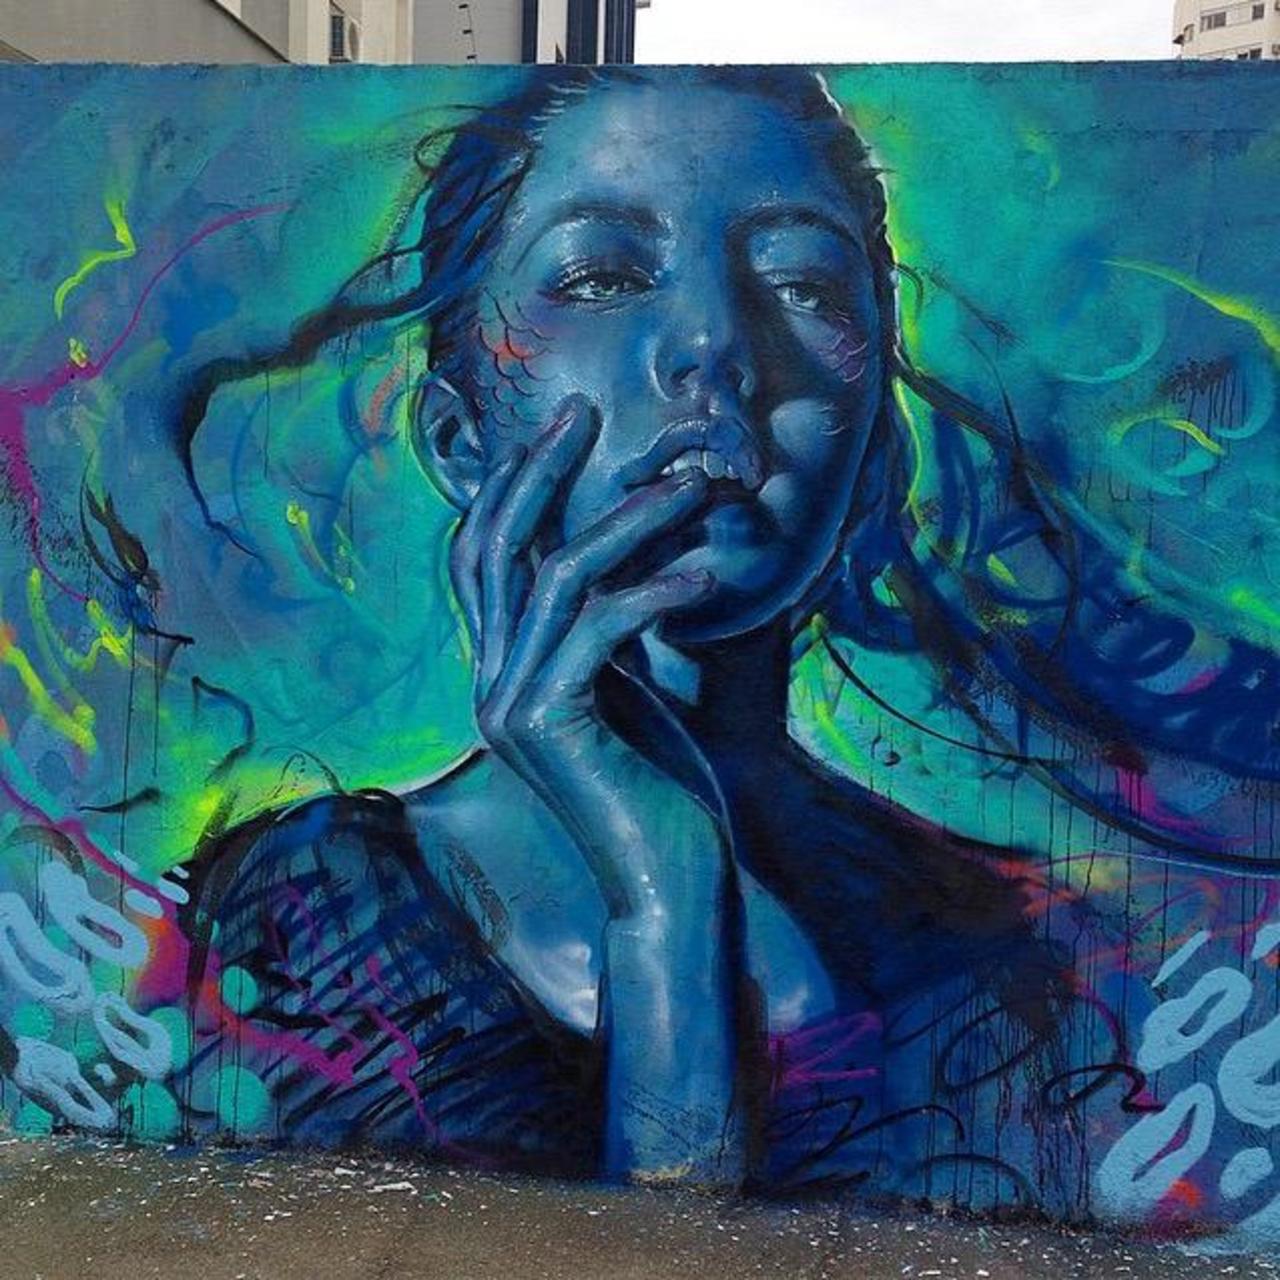 Thiago Valdi new Street Art piece titled 'Day Dreamer' #art #mural #graffiti #streetart http://t.co/3UodbQm48I …… http://twitter.com/GoogleStreetArt/status/652604458048876544/photo/1/large?utm_source=fb&utm_medium=fb&utm_campaign=charlesjackso14&utm_content=652728478597545984